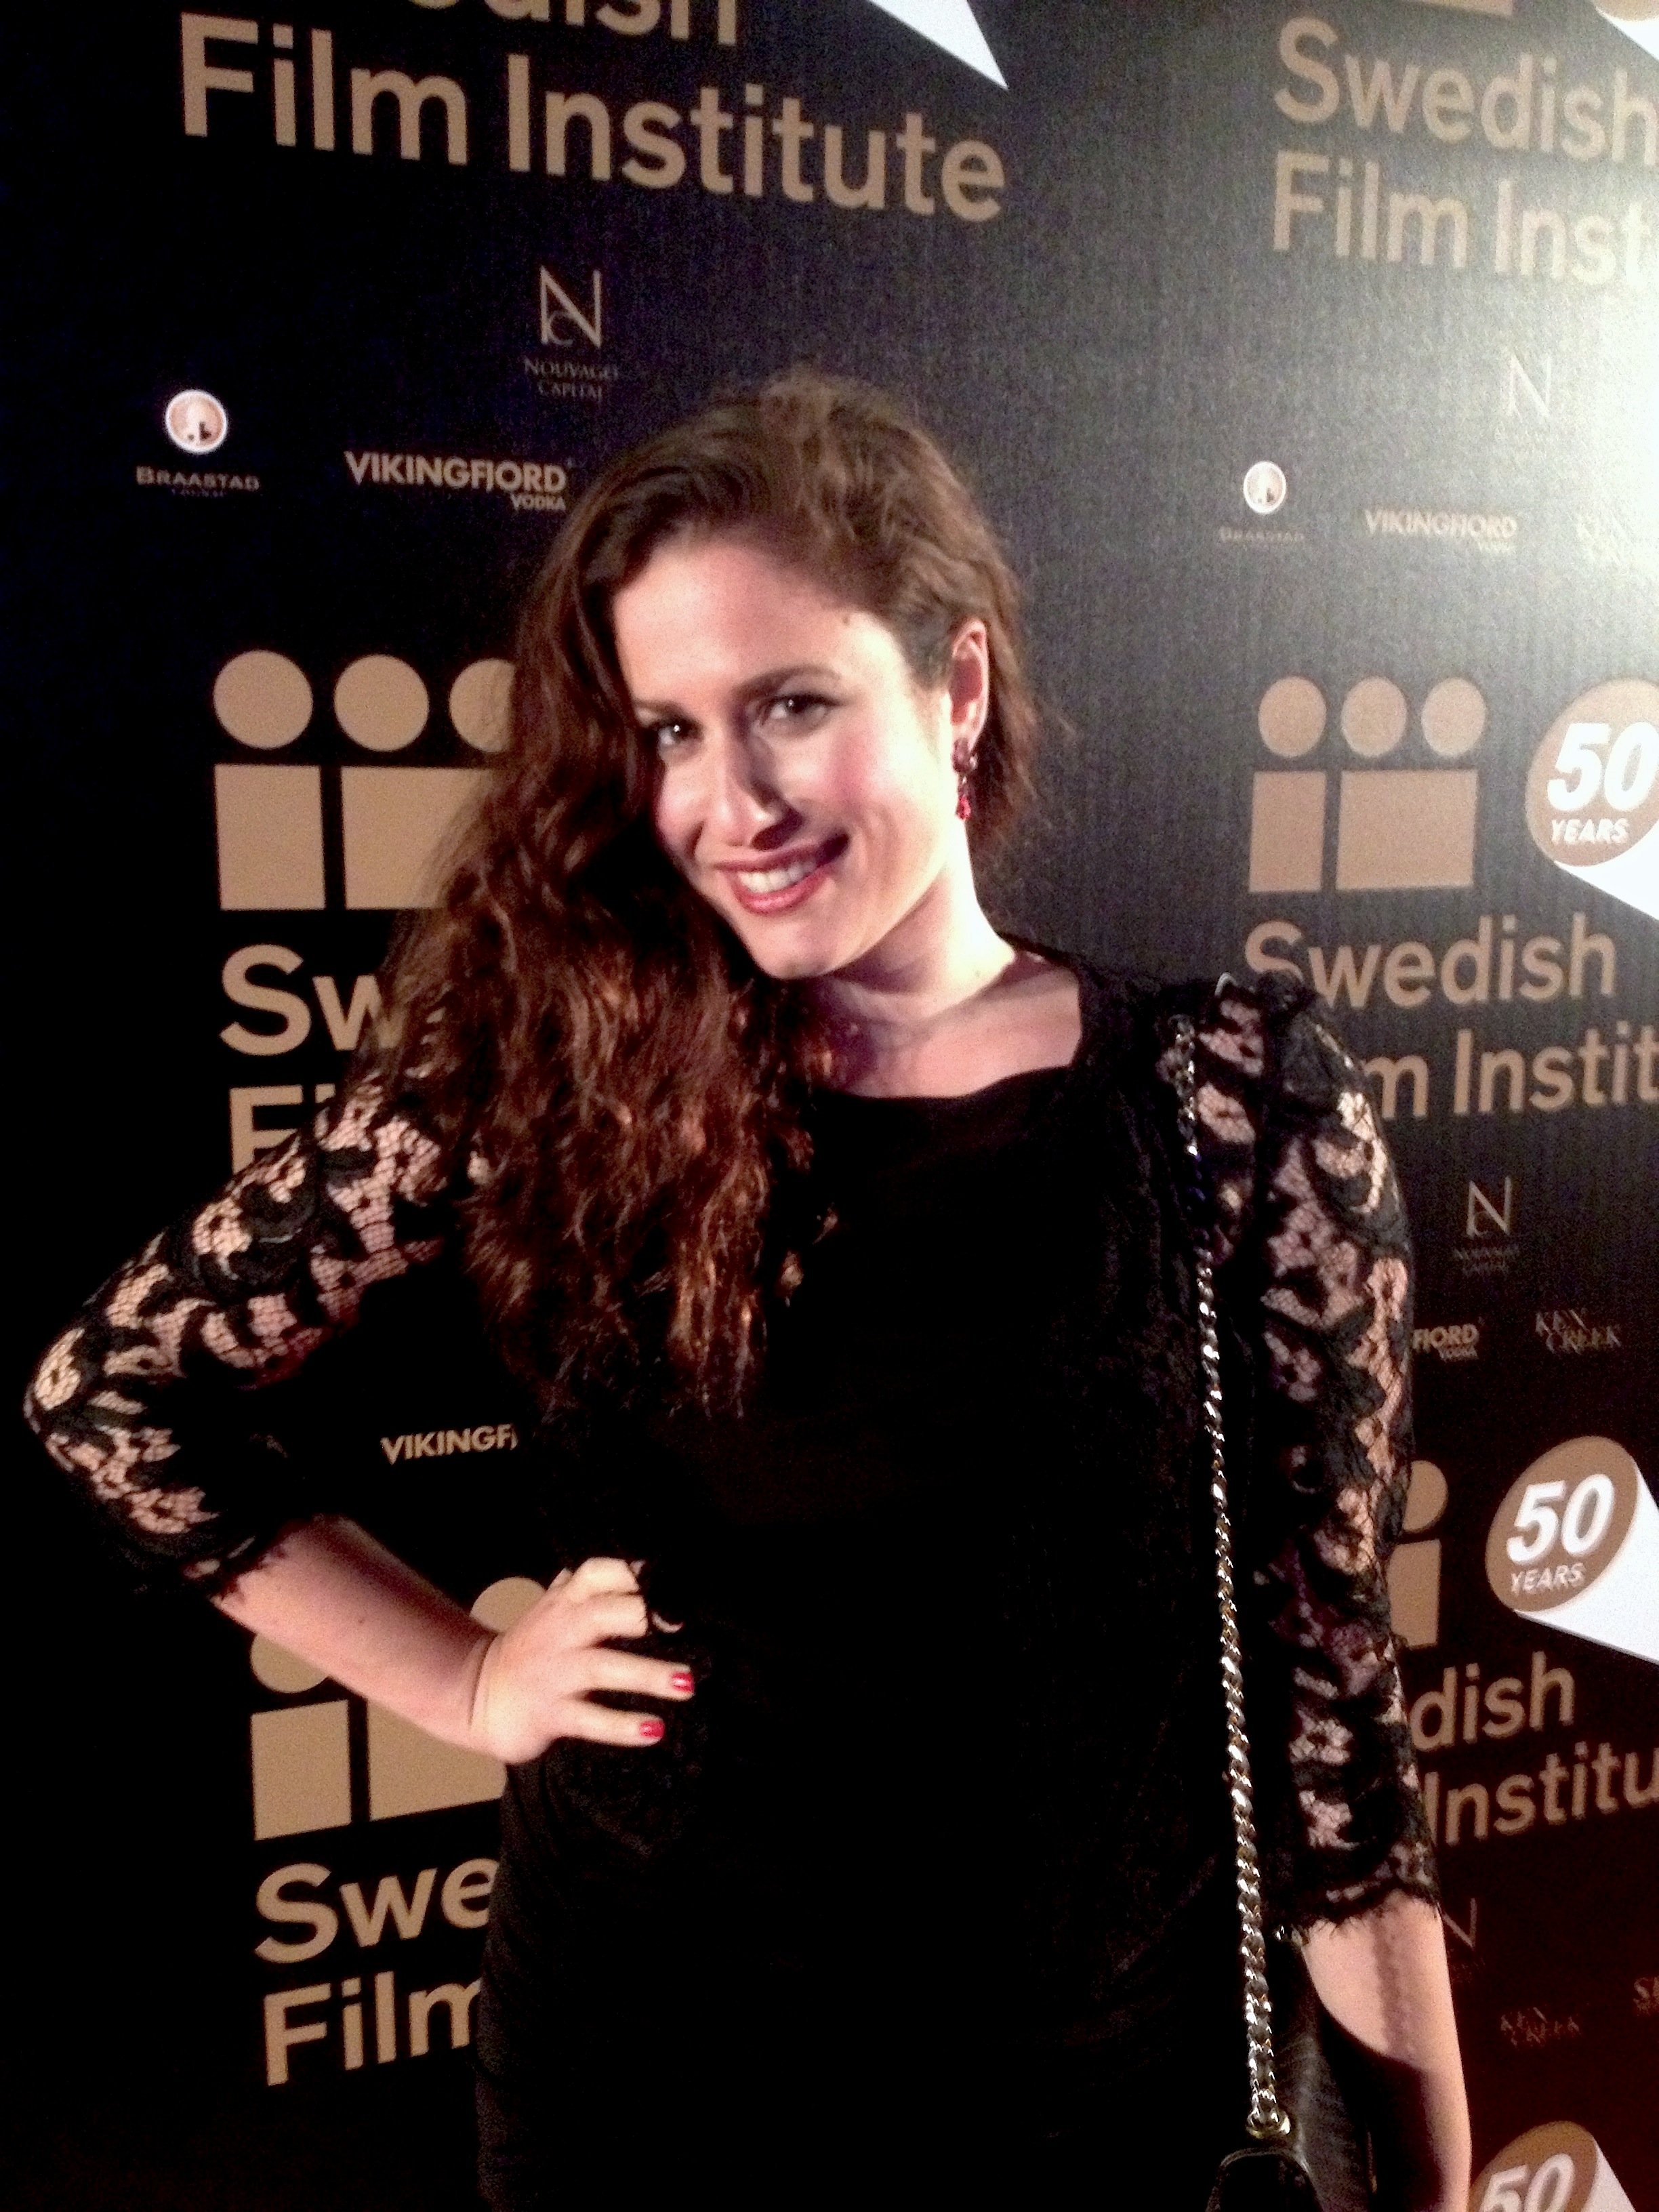 Sara Zommorodi at Cannes Film Festival. Swedish Film Institute celebrates its 50th anniversary.